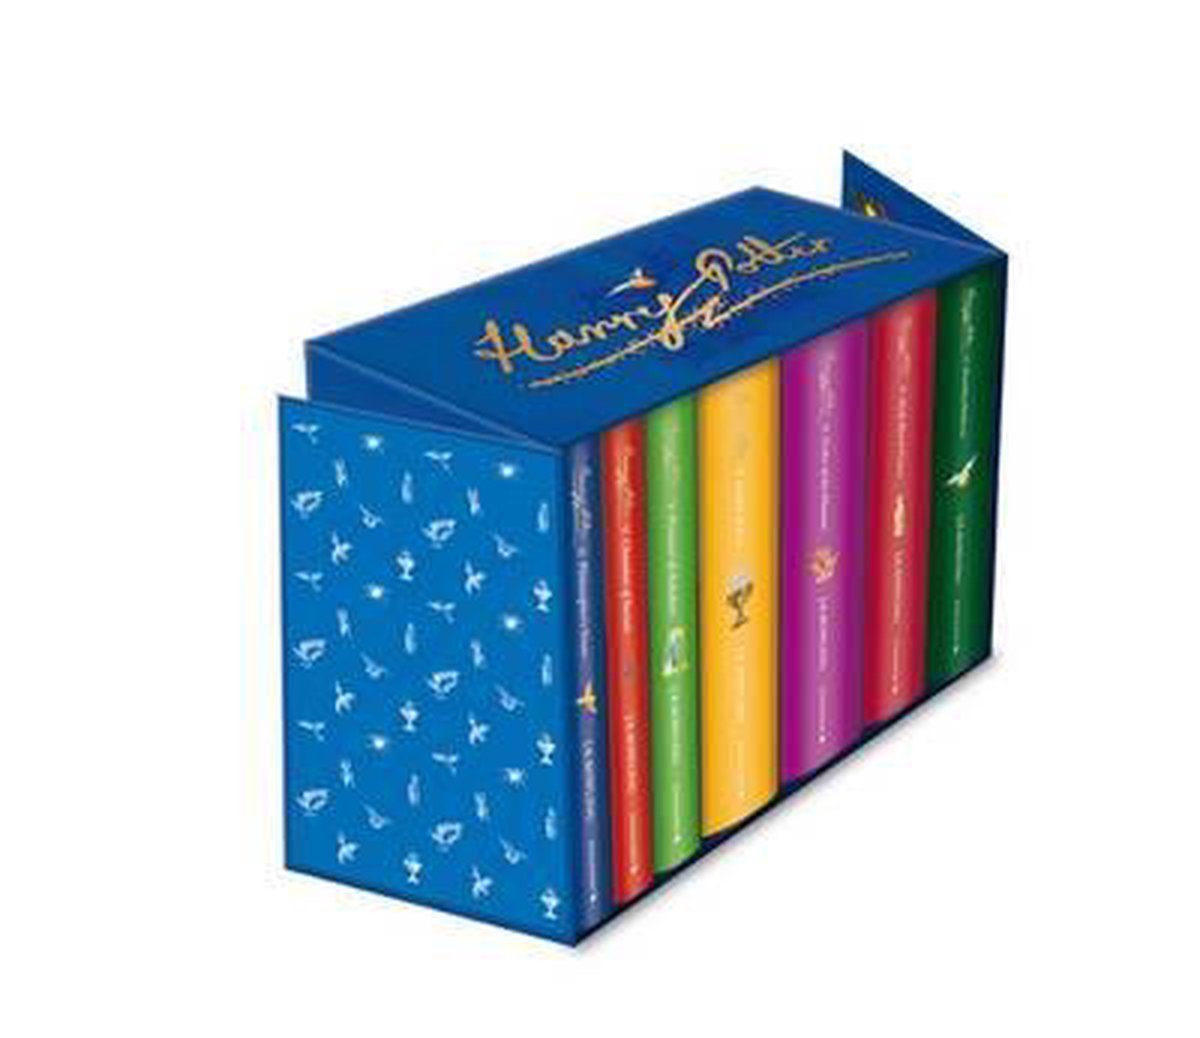 Harry Potter Series Box Set by J.K. Rowling